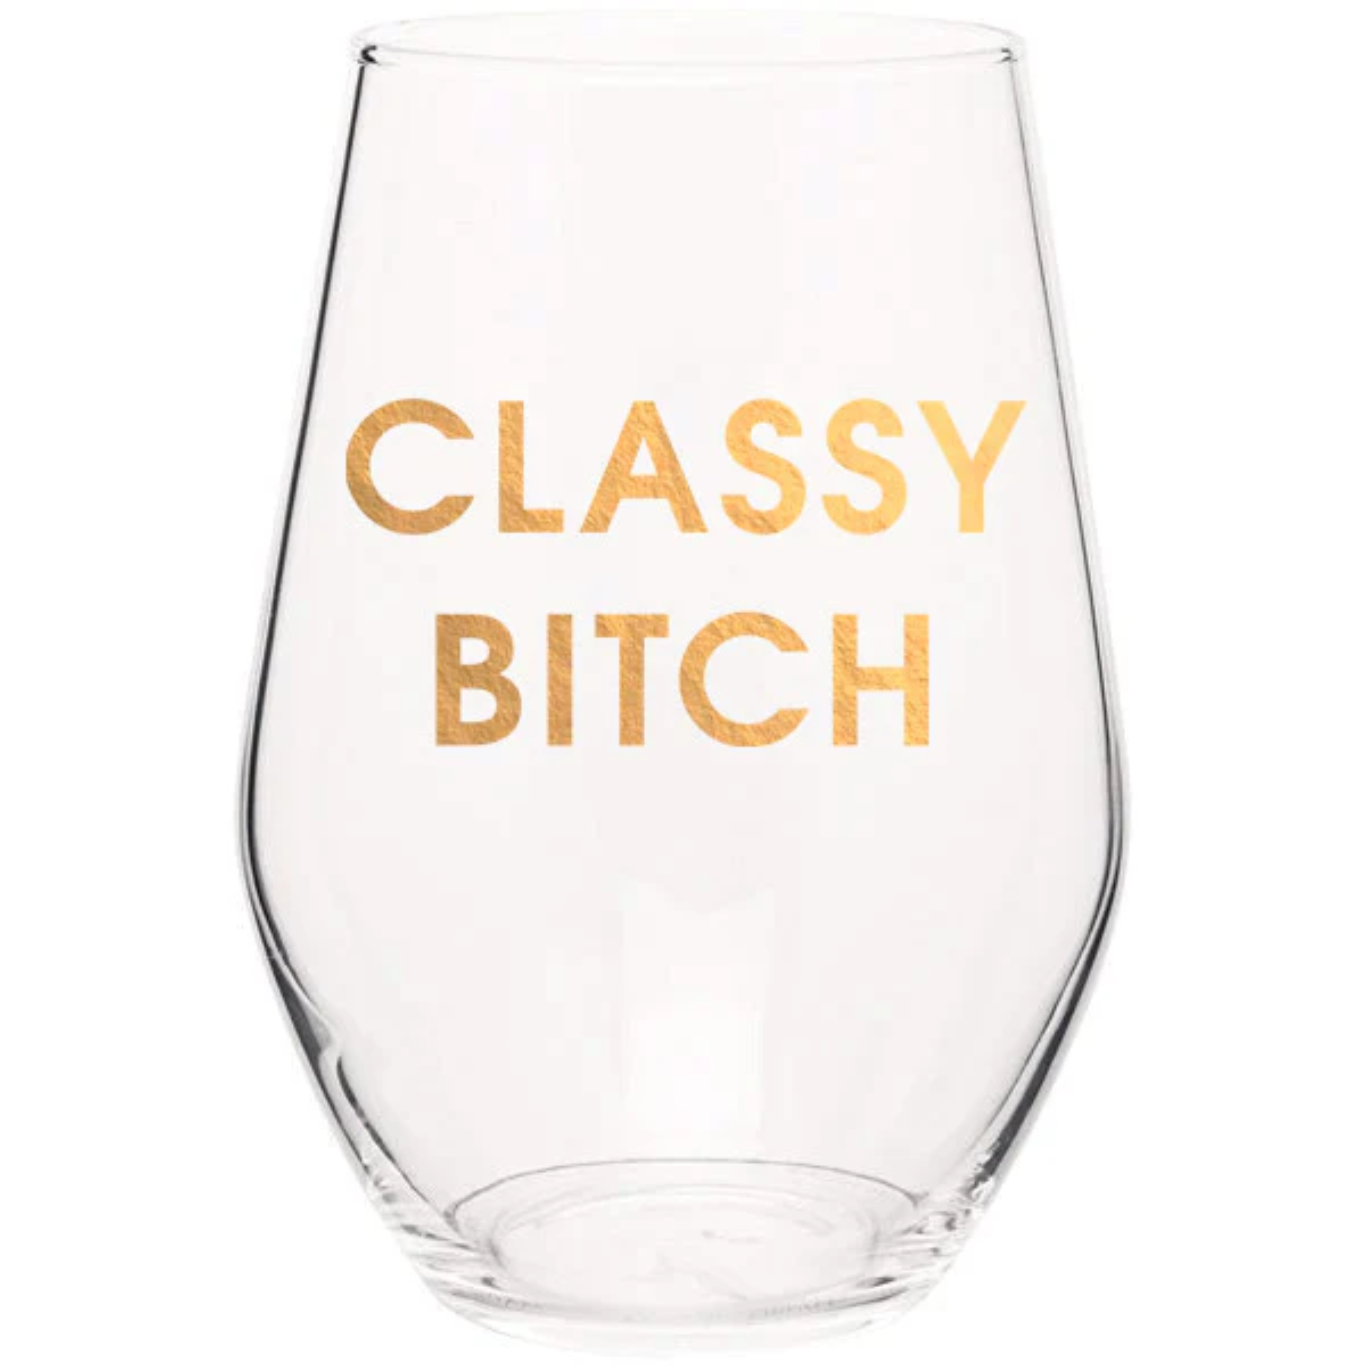 Classy Bitch - Gold Foil Stemless Wine Glass